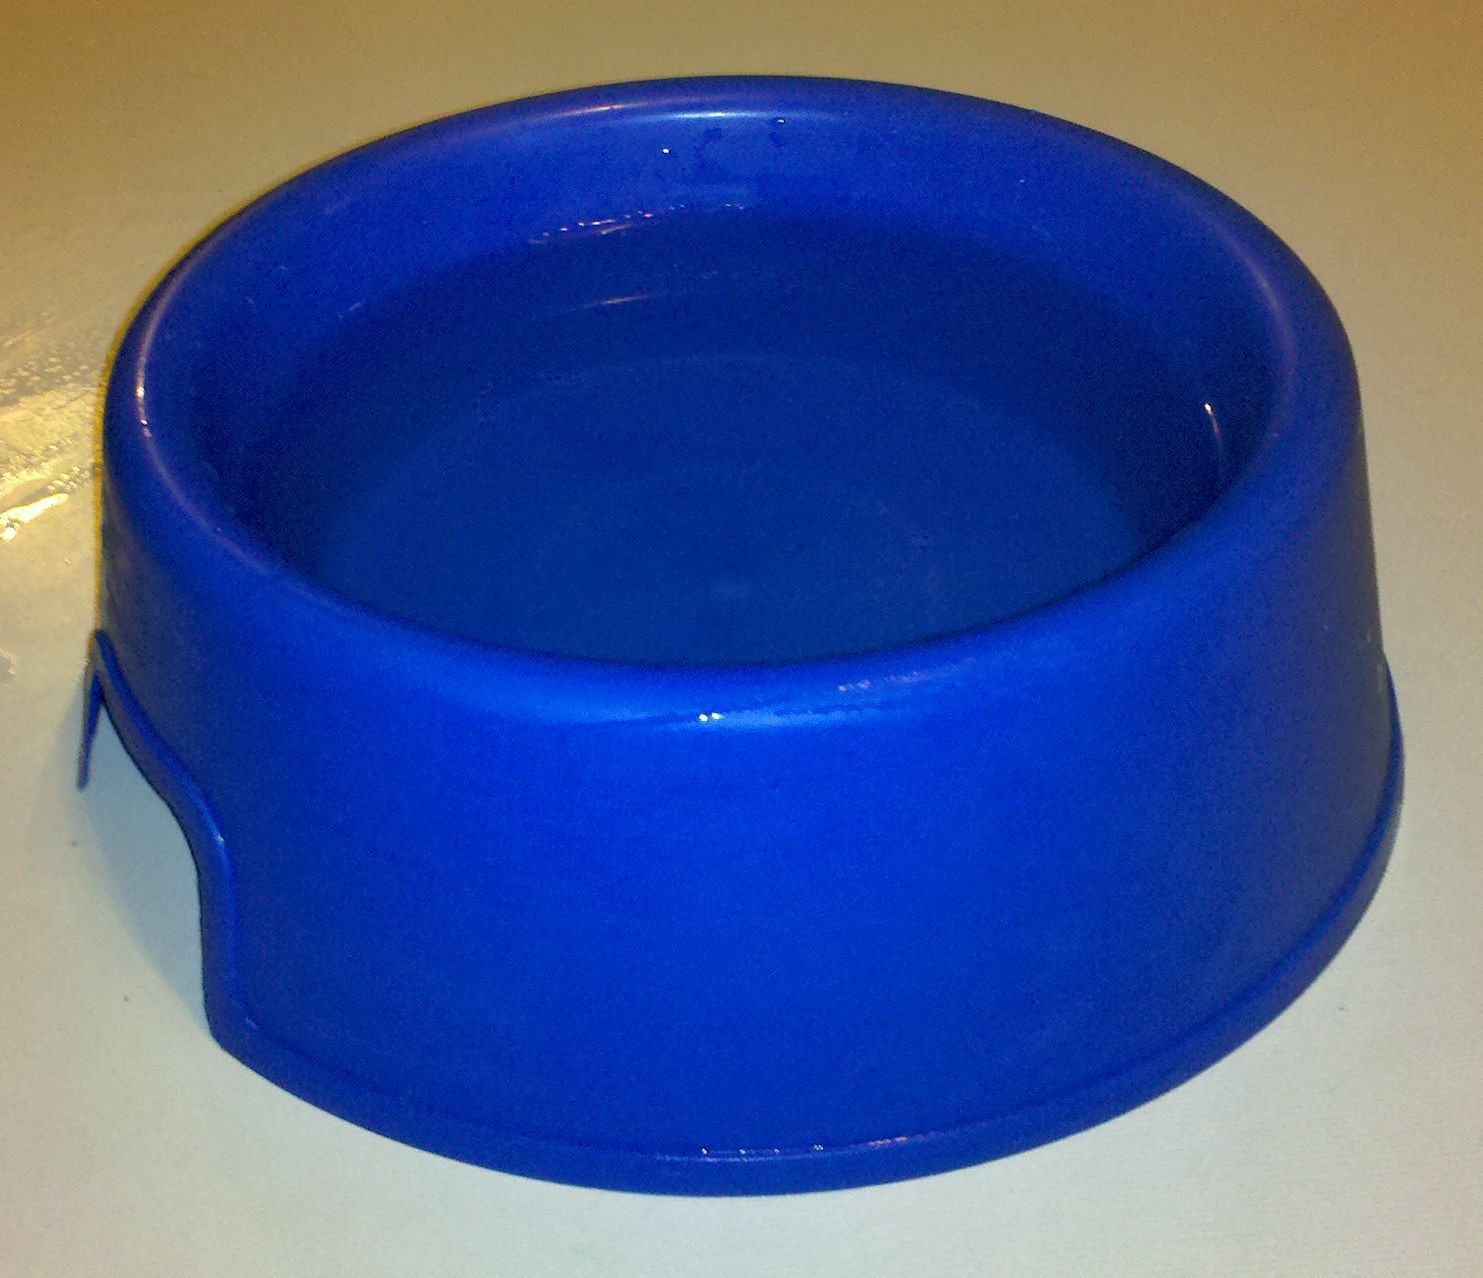 File:Dog Water Bowl.jpg - Wikimedia Commons